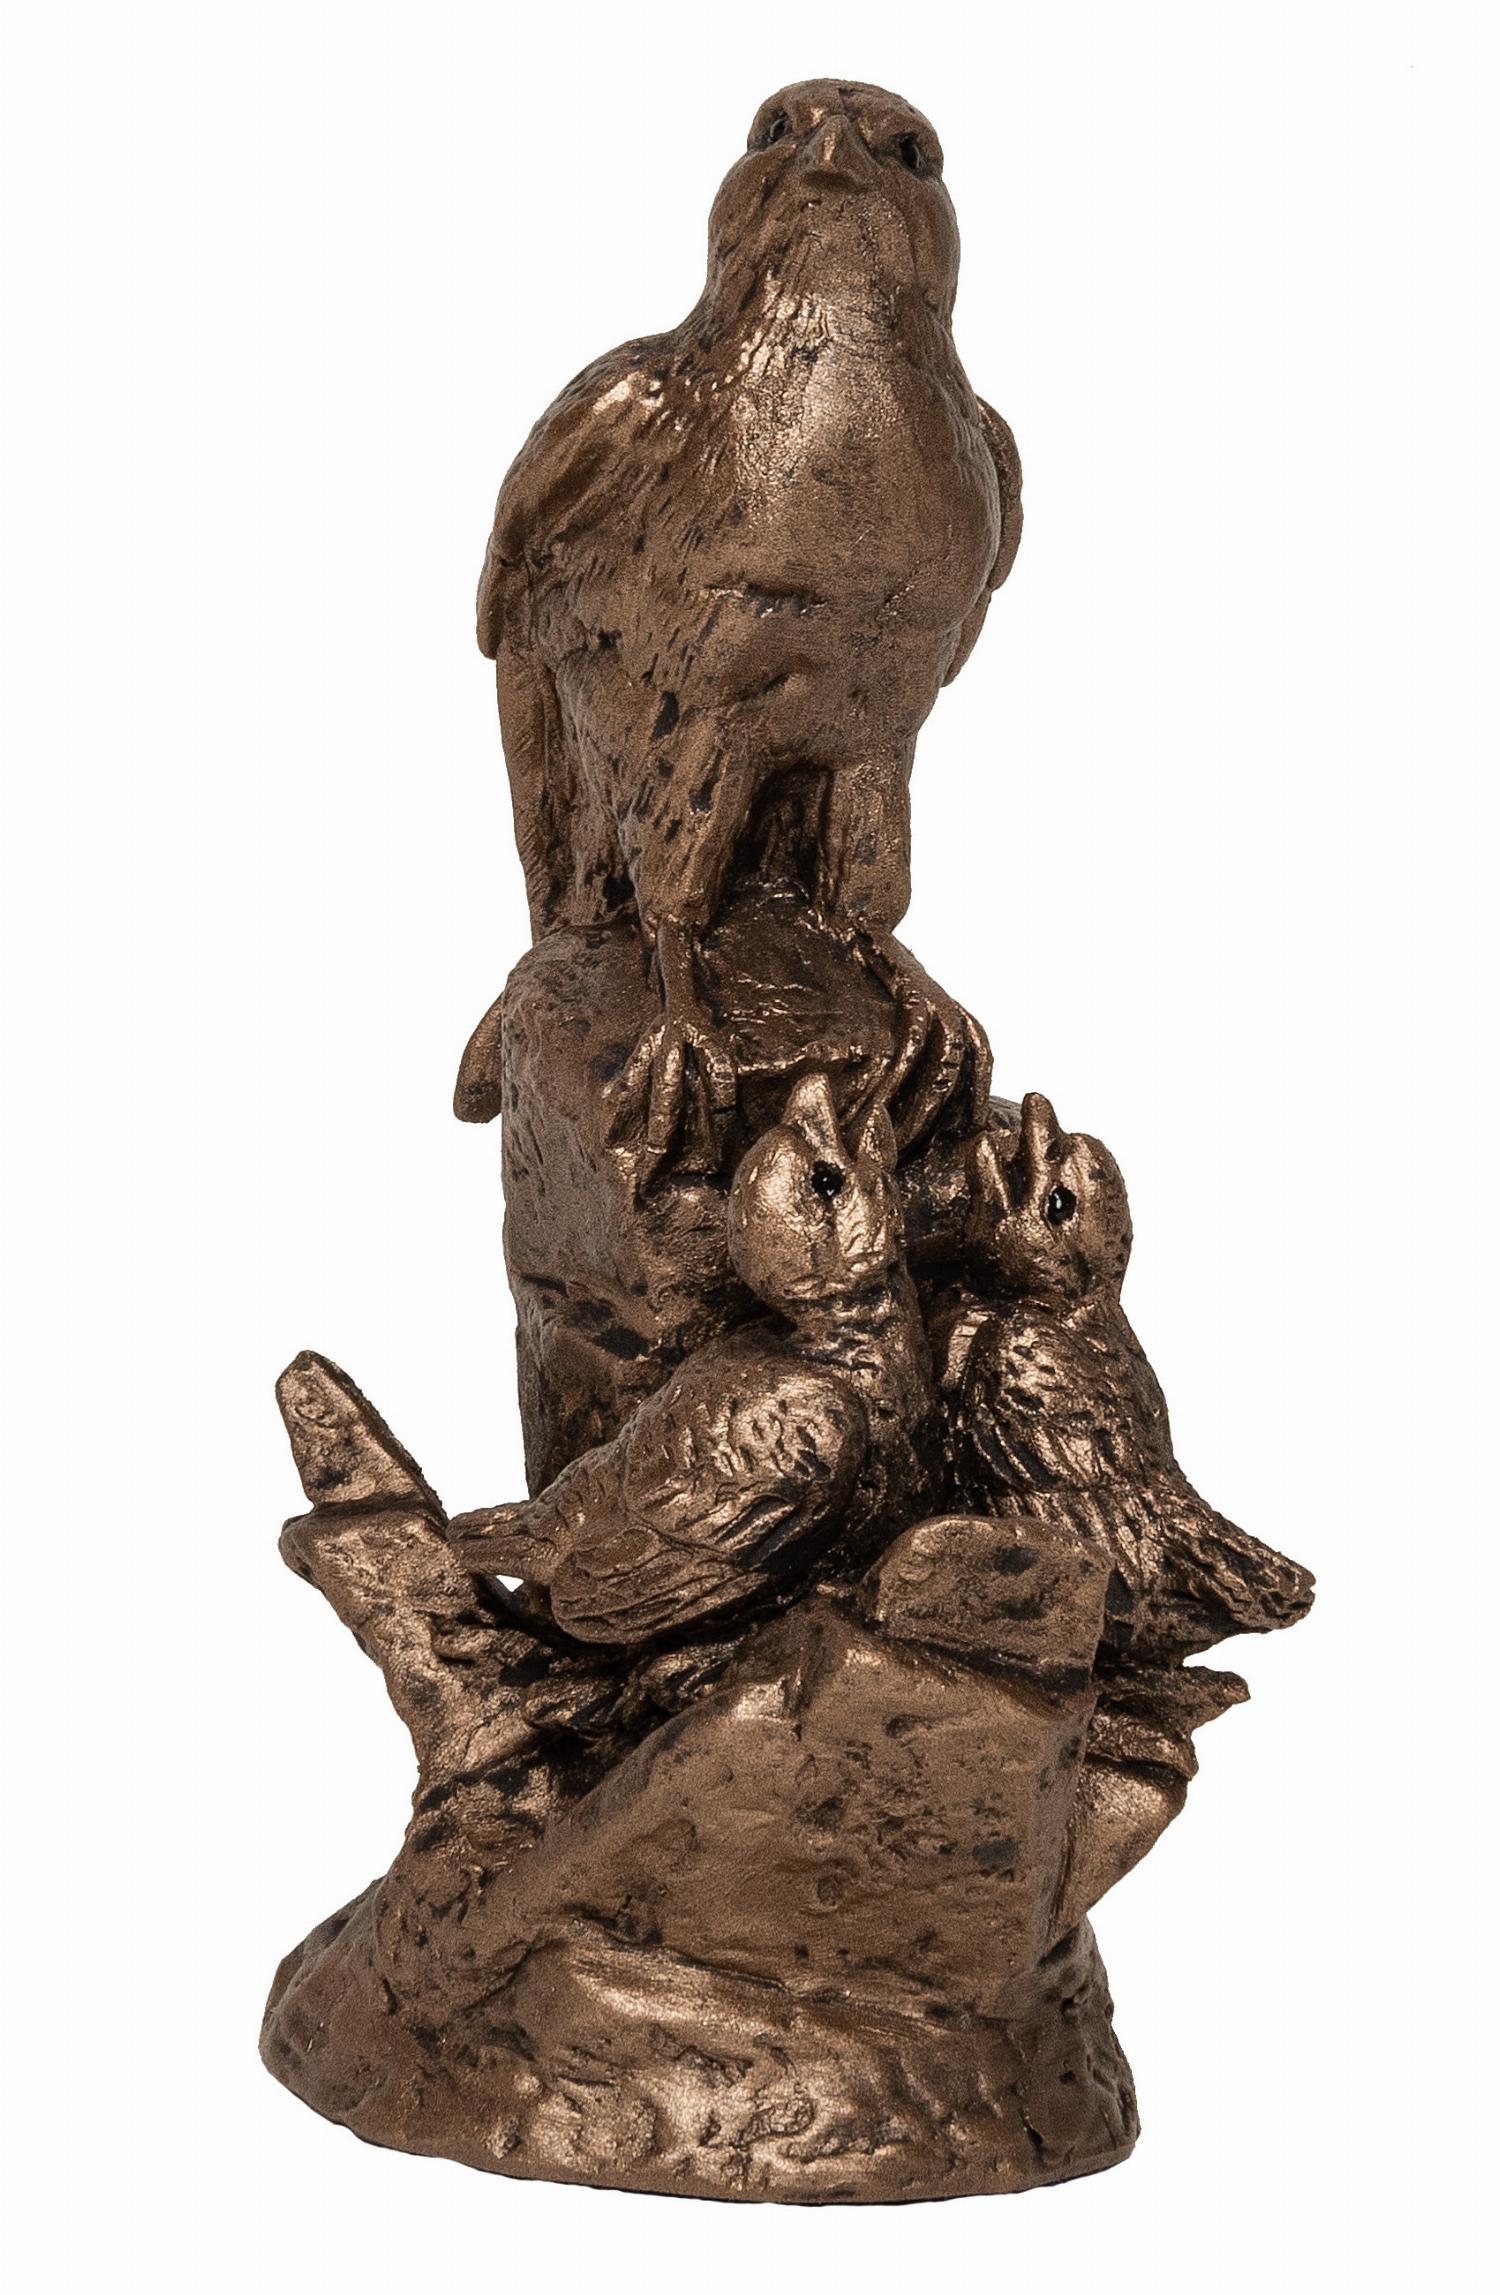 Red Kite Bird of Pray Frith Cold cast Bronze Sculpture statue ornament